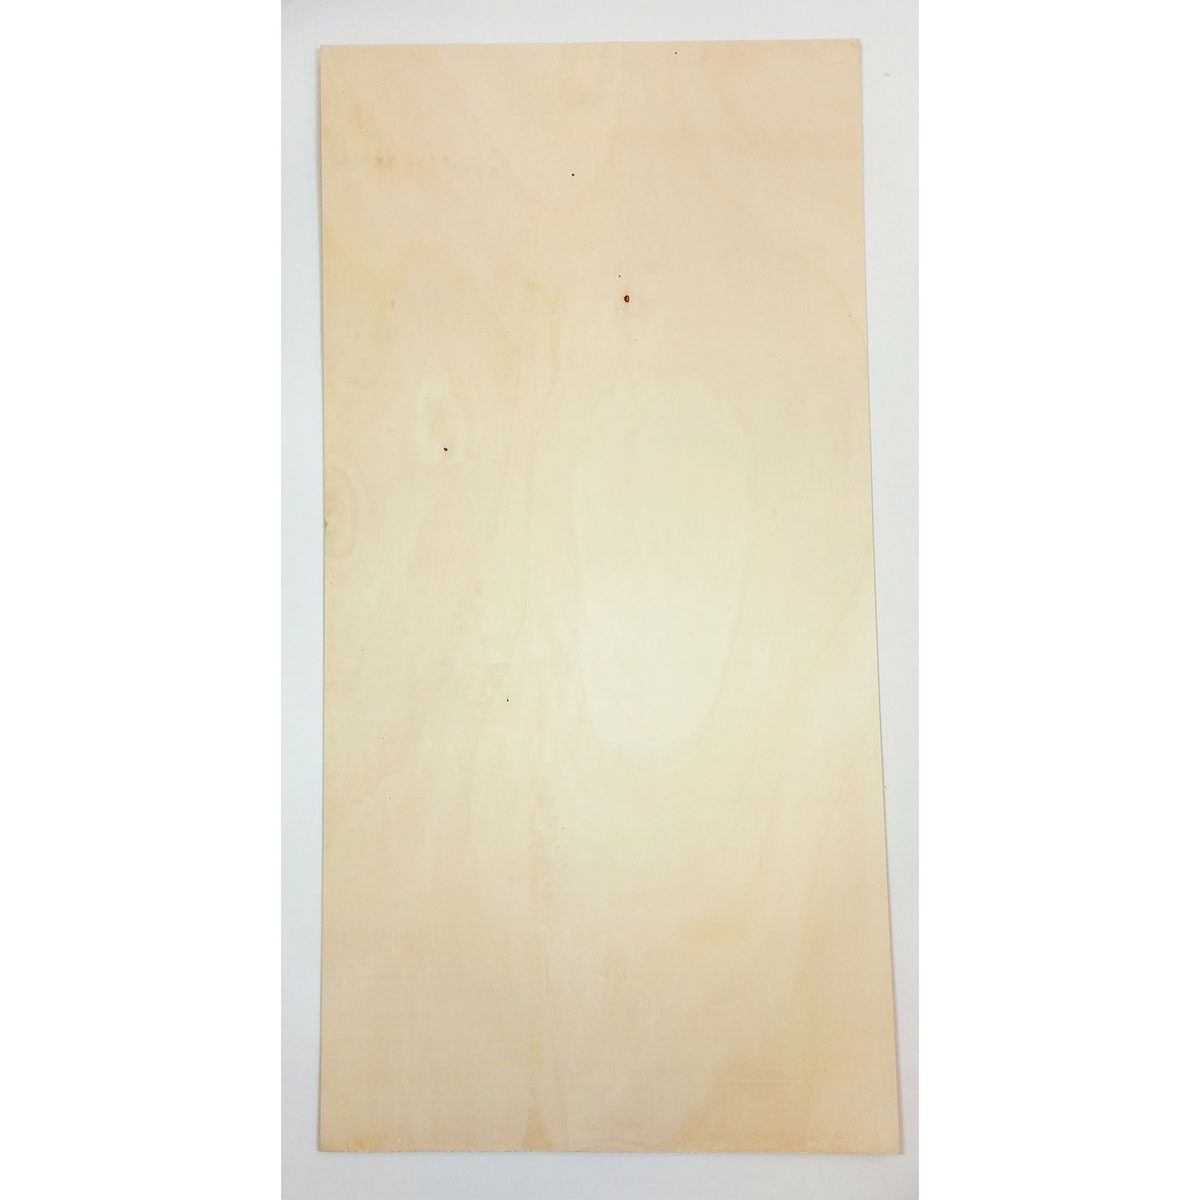 Modellbausperrholz, Pappel, 100x50x0,5 cm